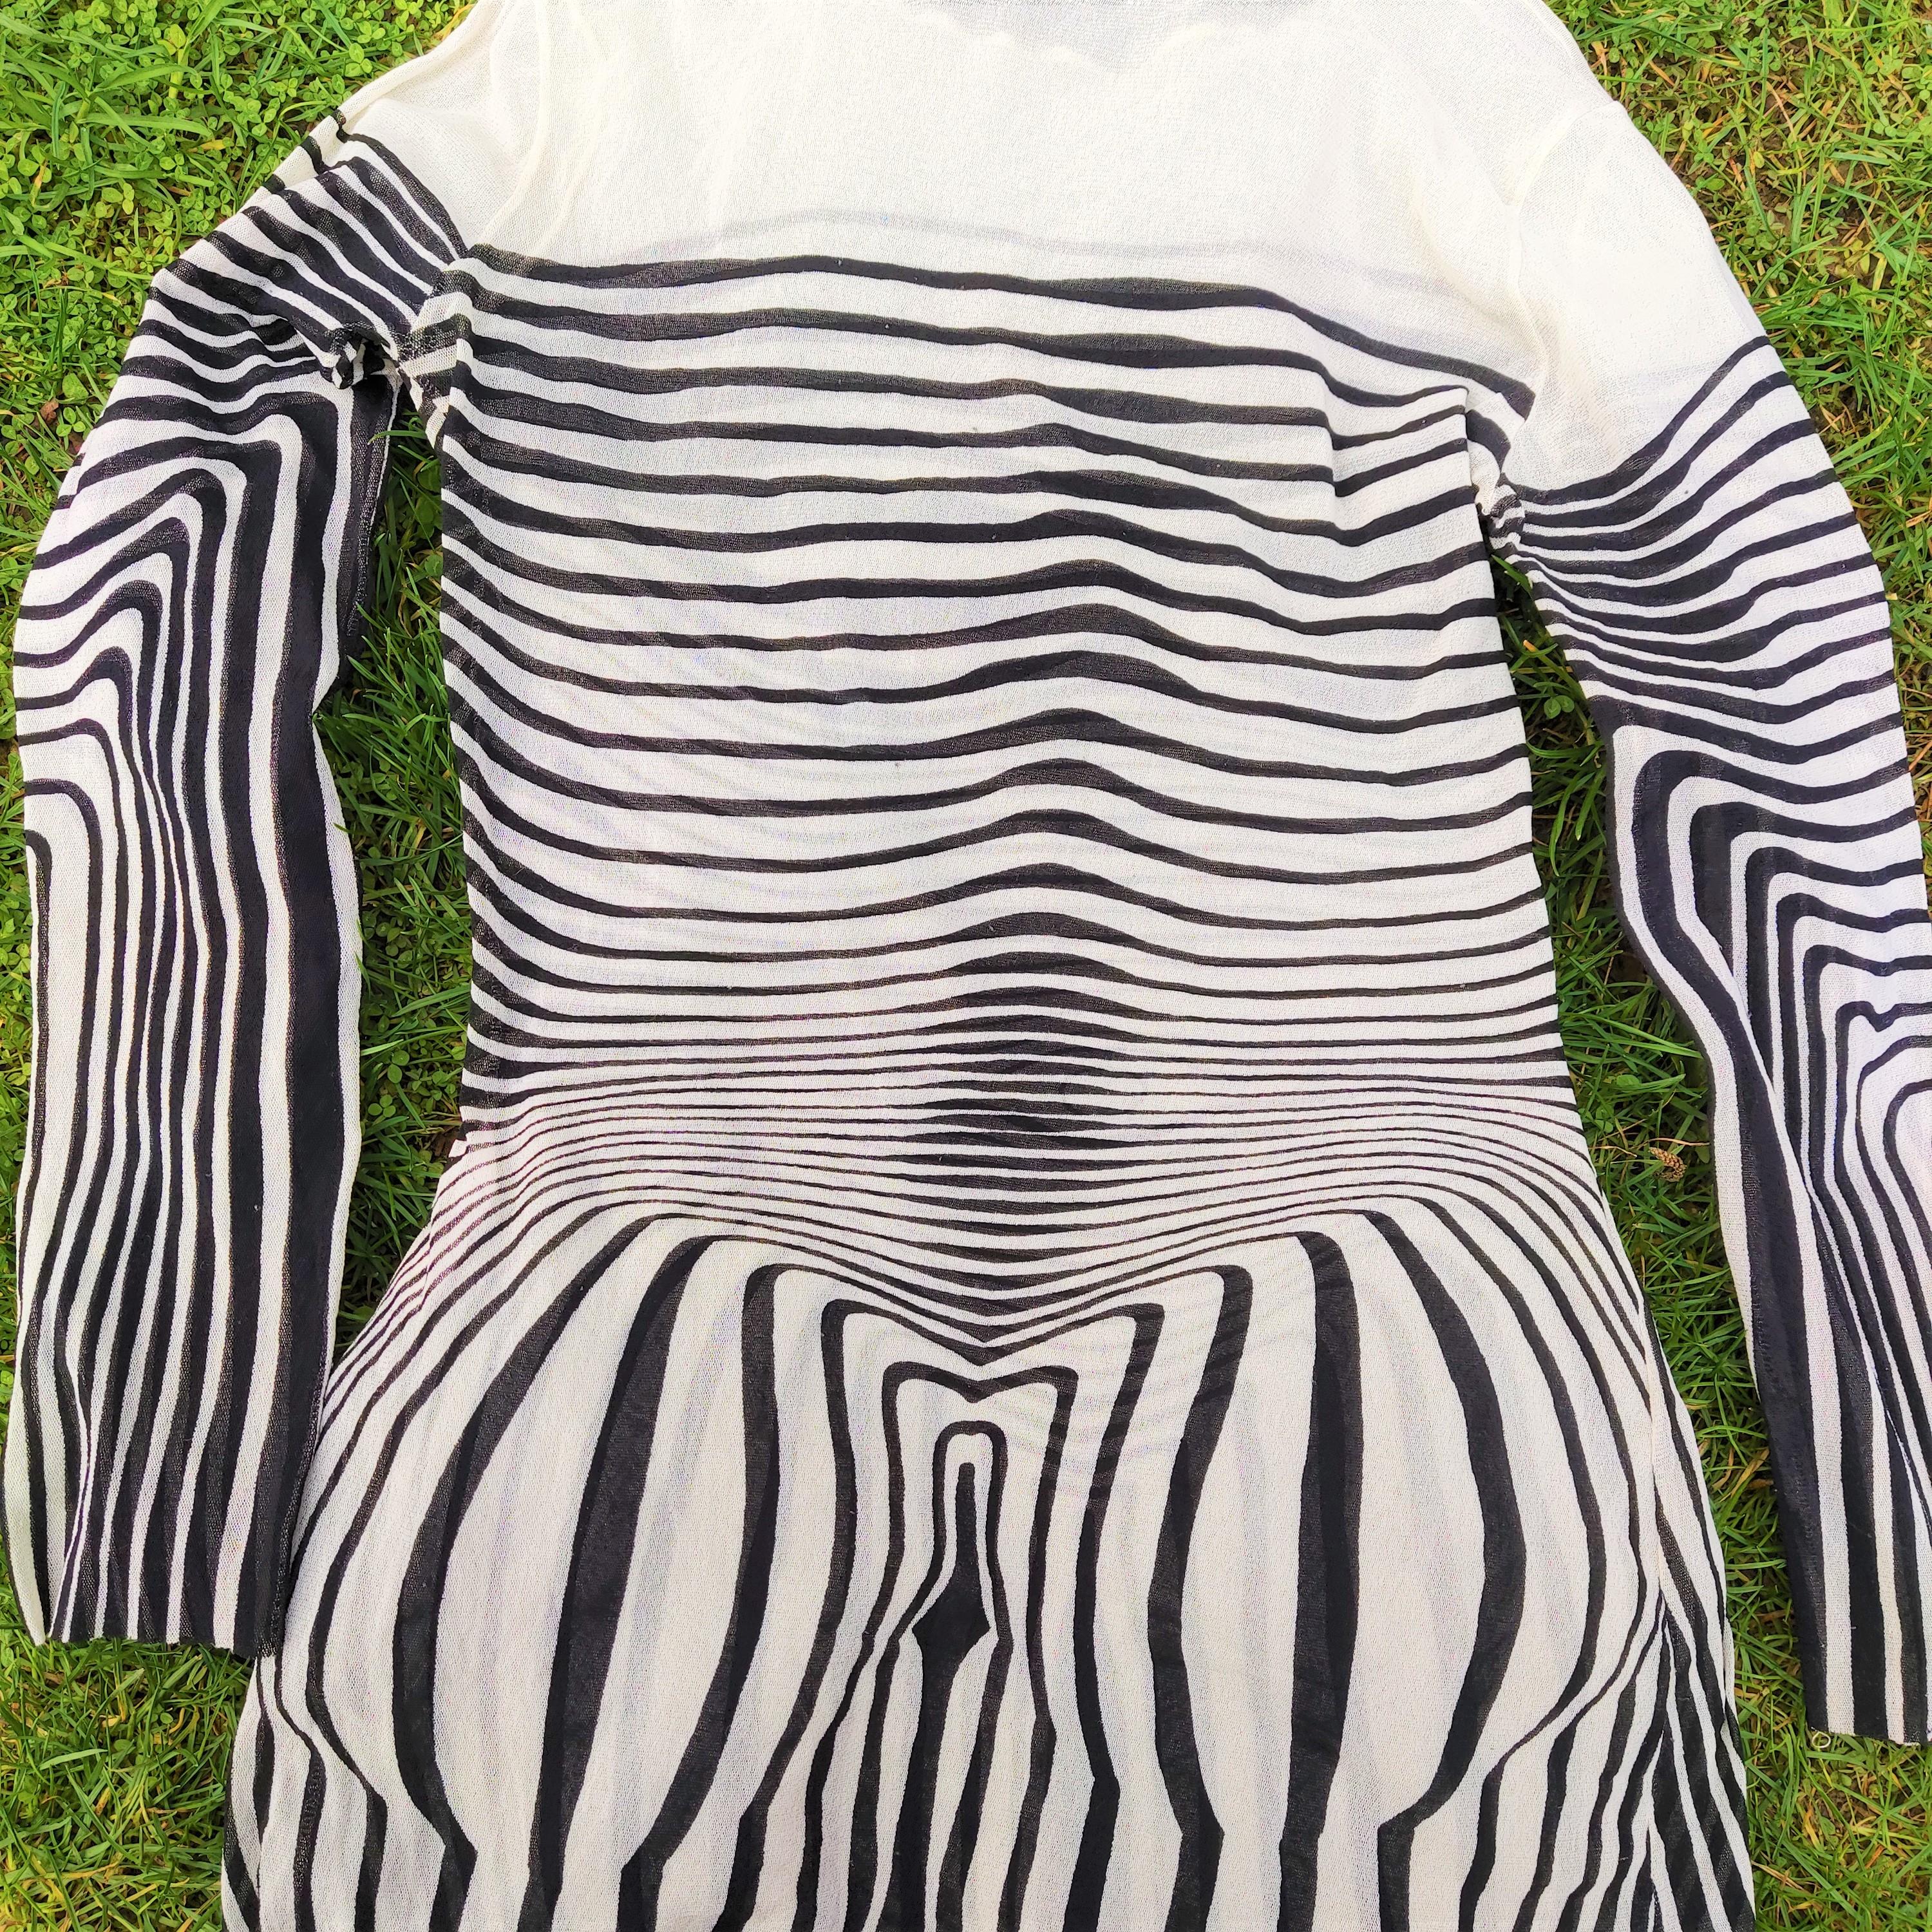 Jean Paul Gaultier Cyberbaba Zebra Optical Illusion Striped Transparent Mesh Top 6